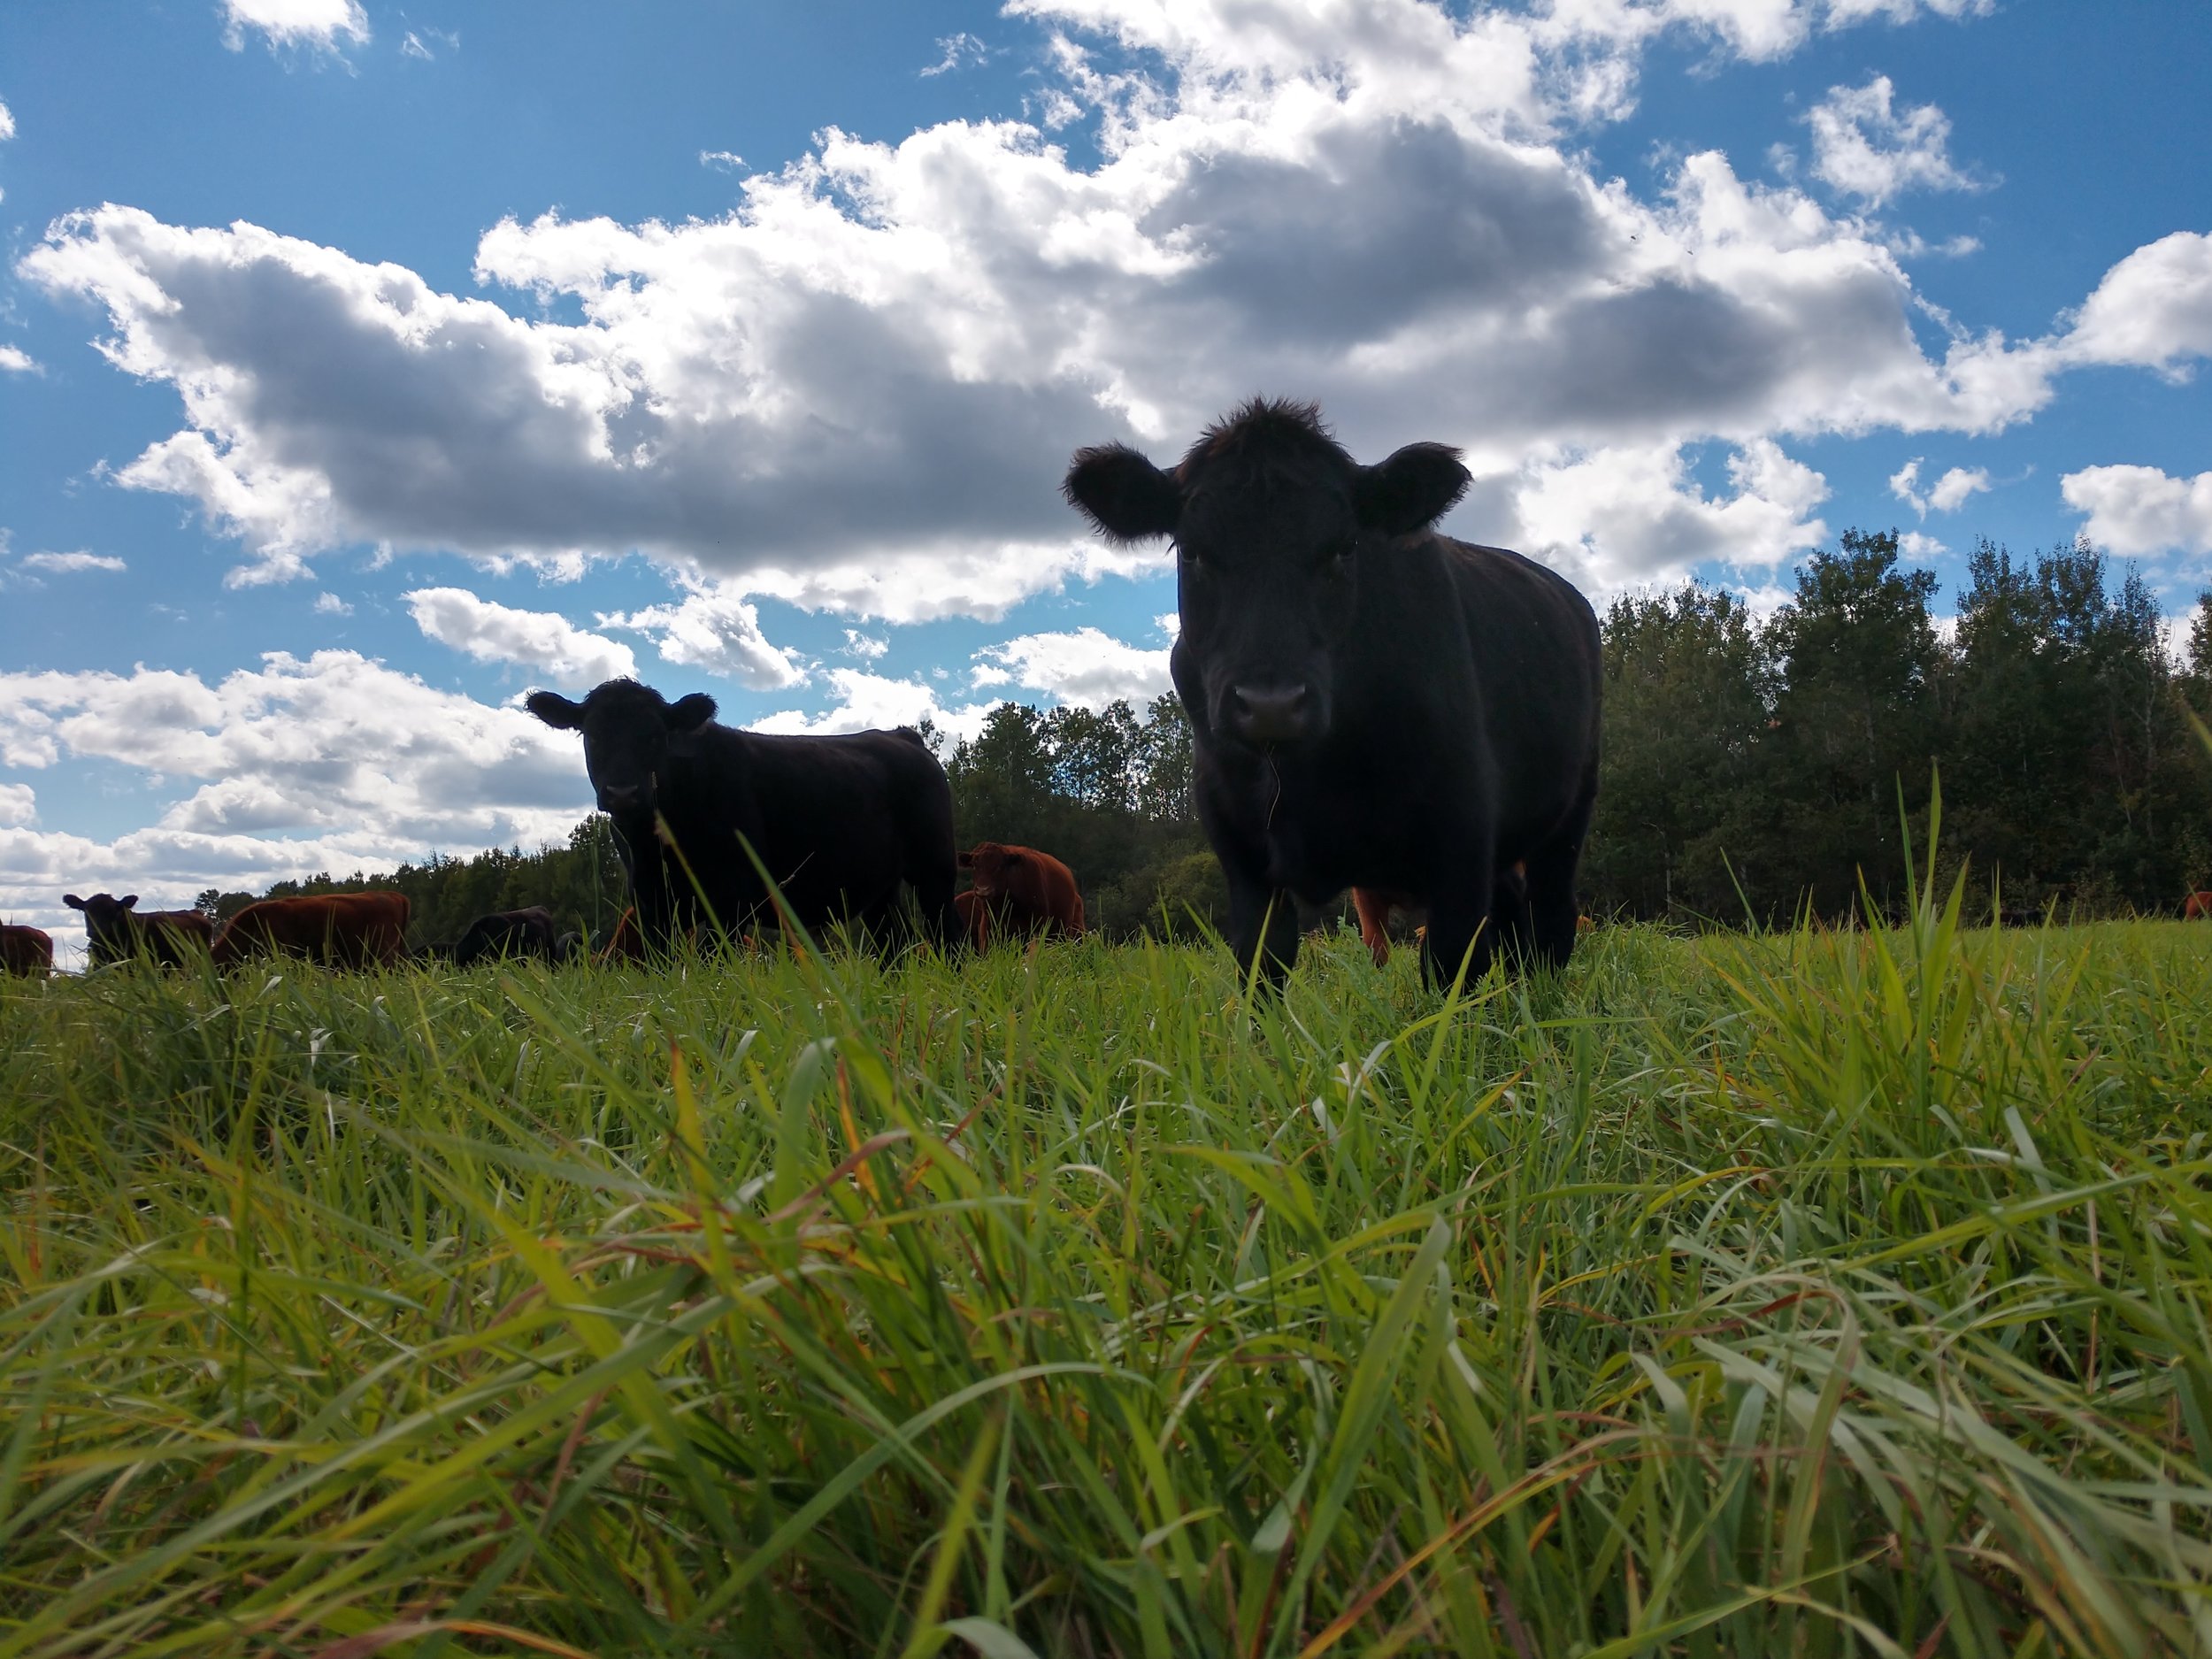 cover photo - cattle grazing under blue sky.jpg